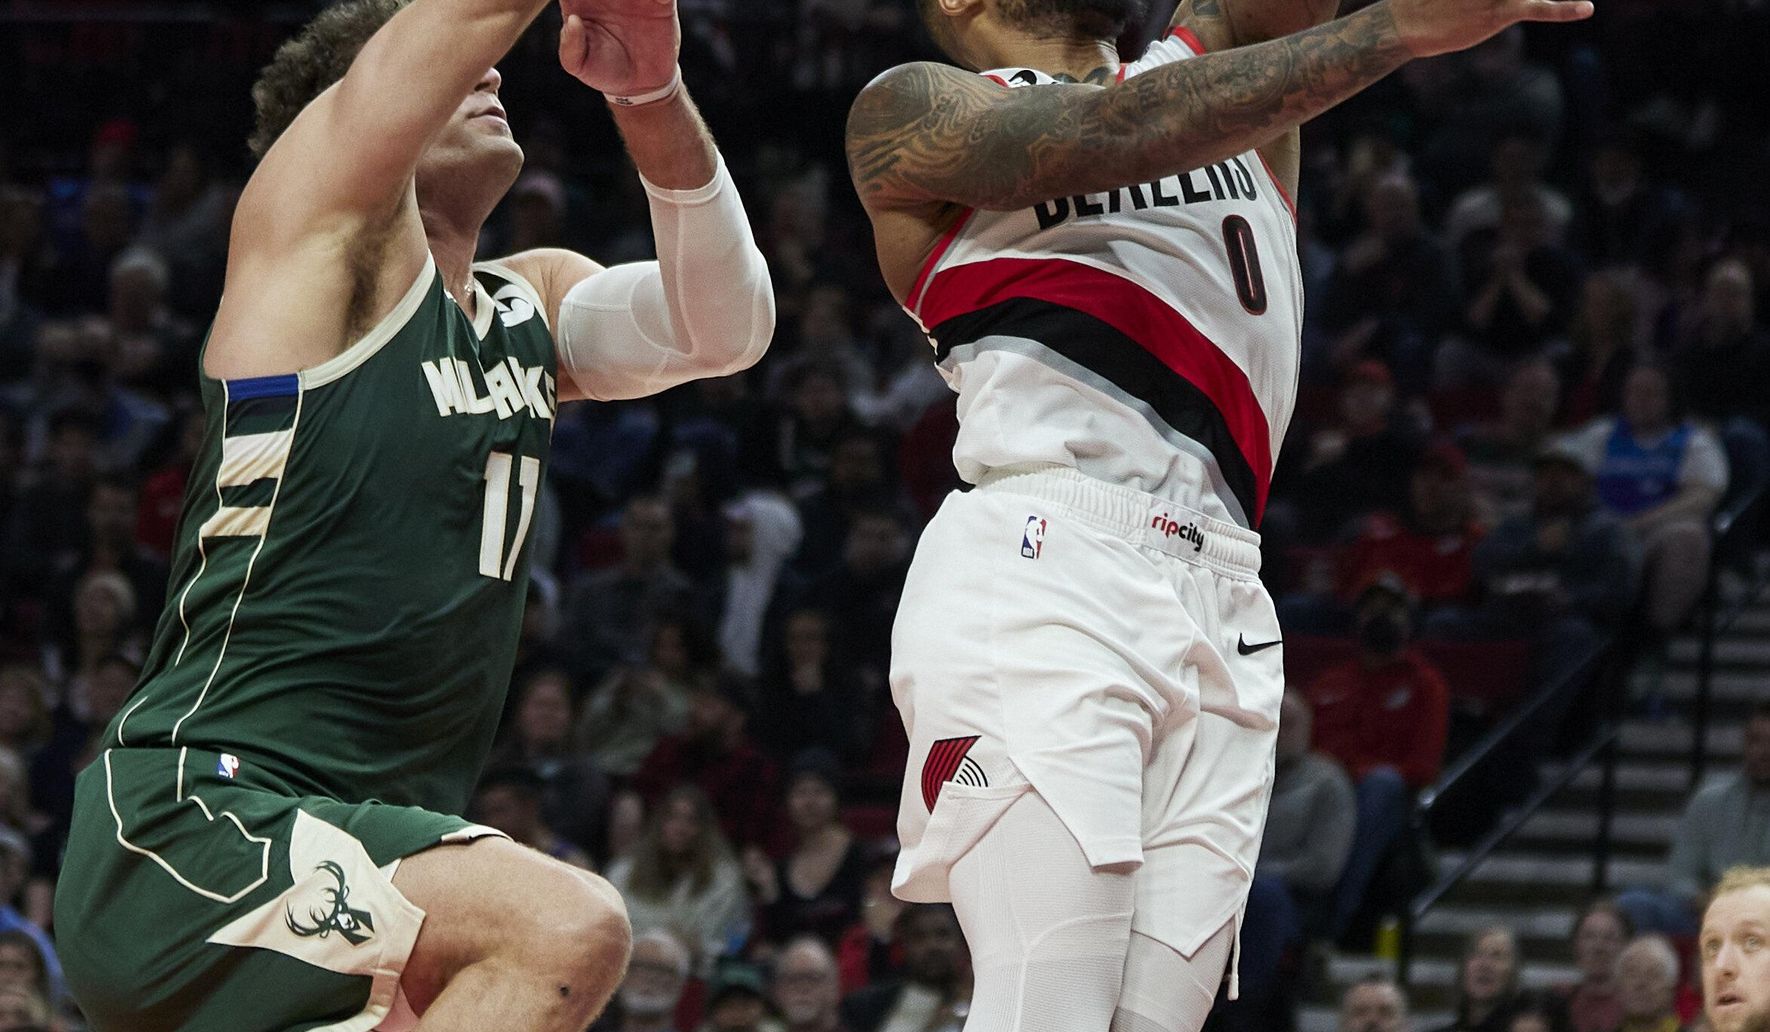 NBA: Damian Lillard looks to keep scoring as Blazers host Wizards